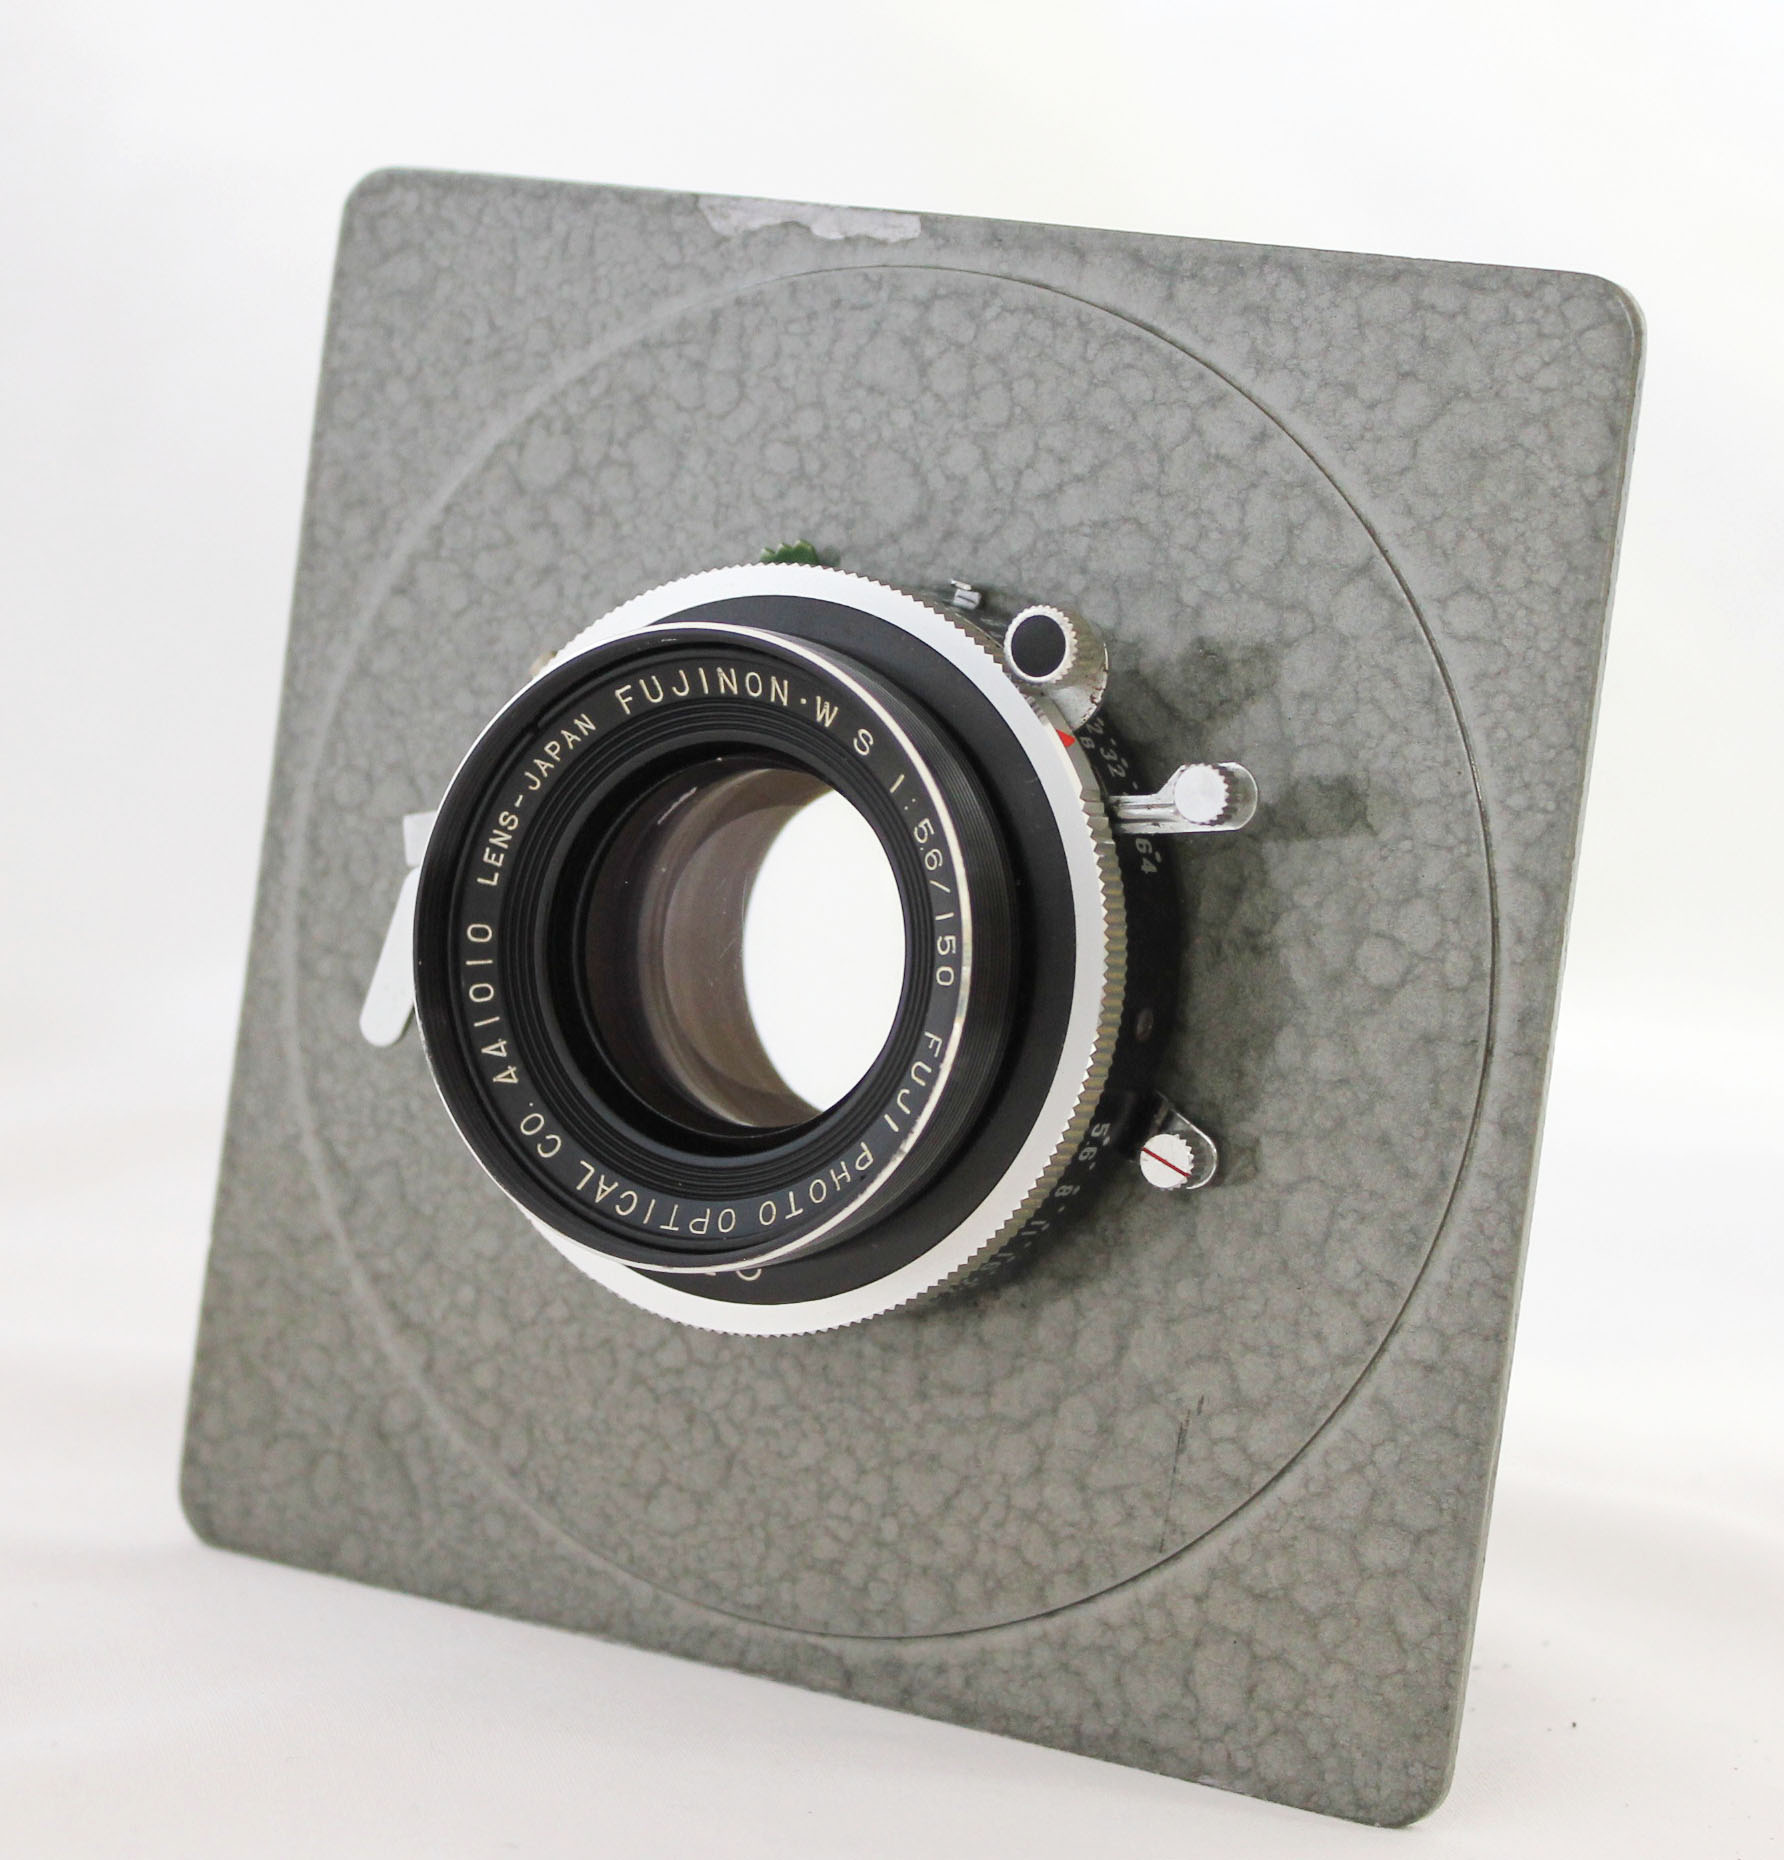 Japan Used Camera Shop | Fuji Fujinon W S 150mm F/5.6 Large Format Lens Seiko Shutter from Japan